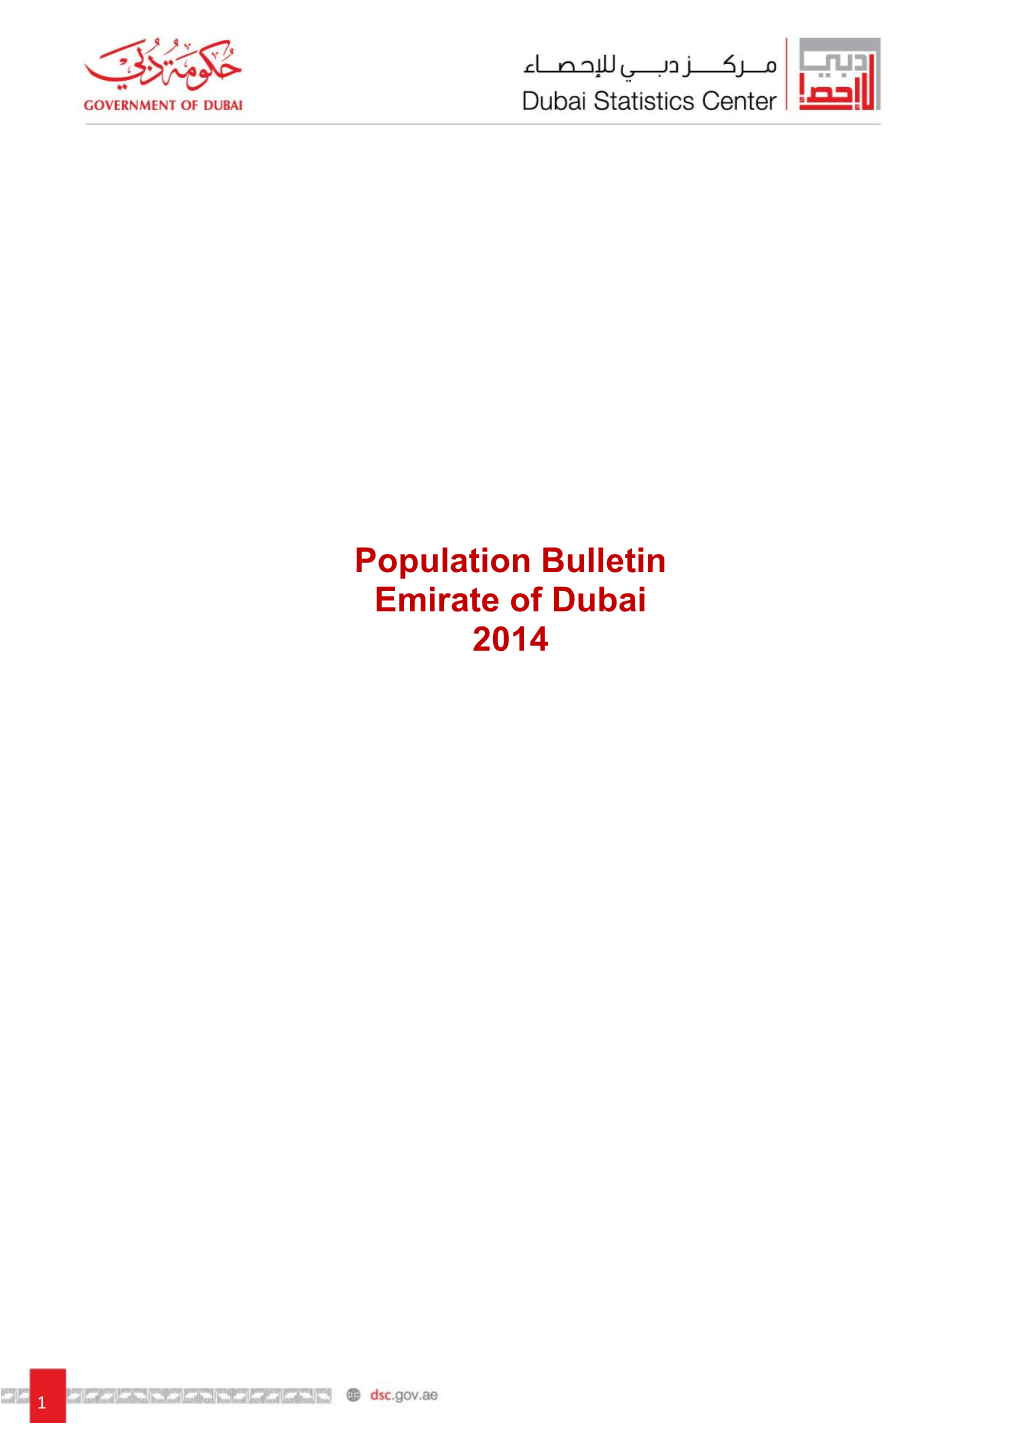 Population Bulletin Emirate of Dubai 2014